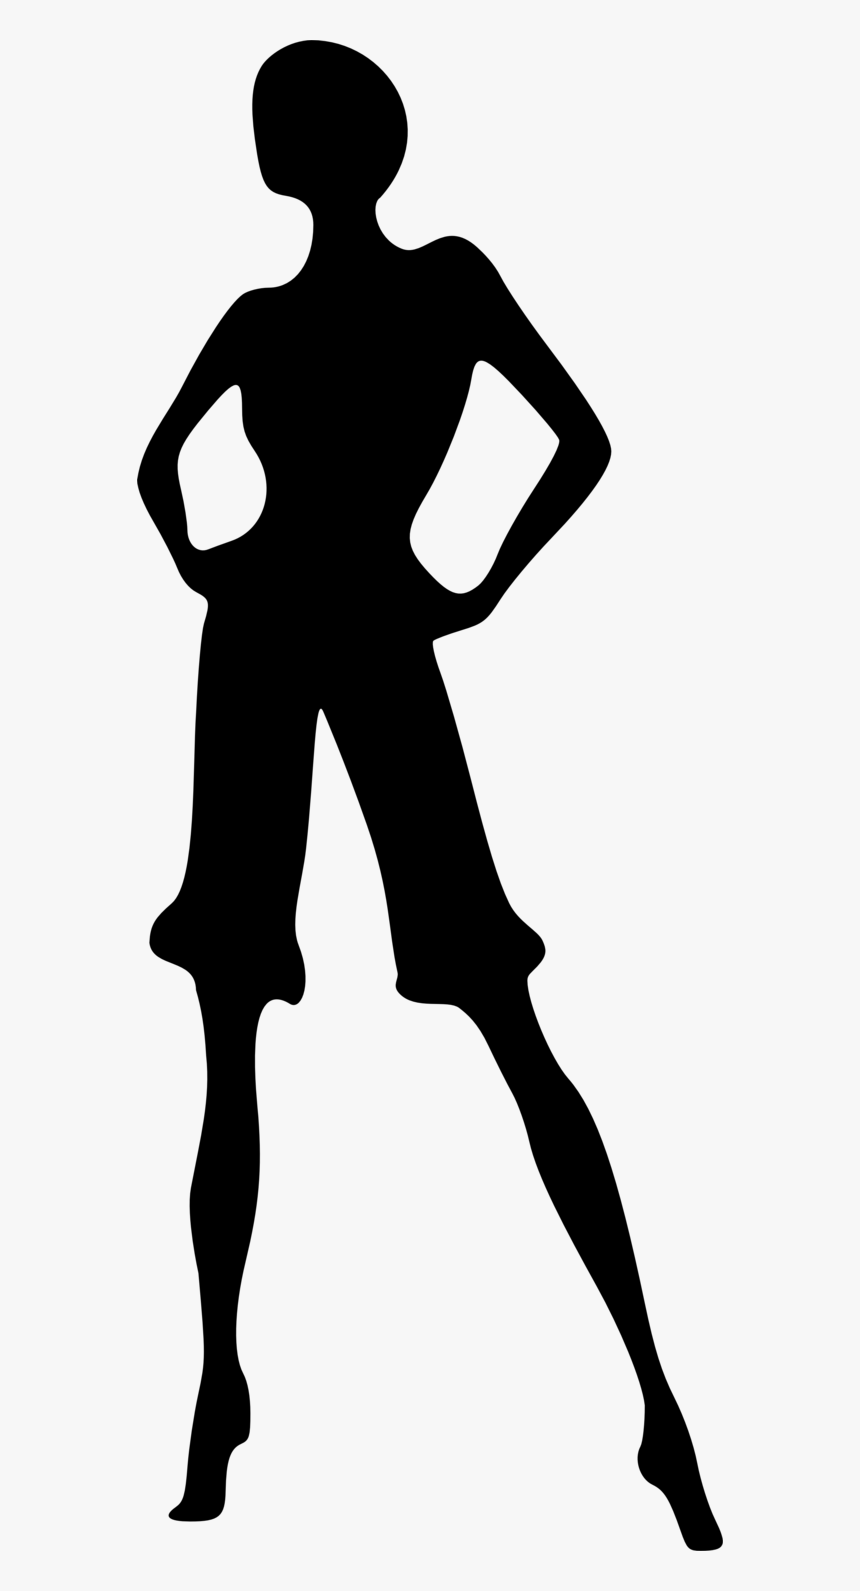 Public Domain Clip Art Image - Short Hair Woman Silhouette